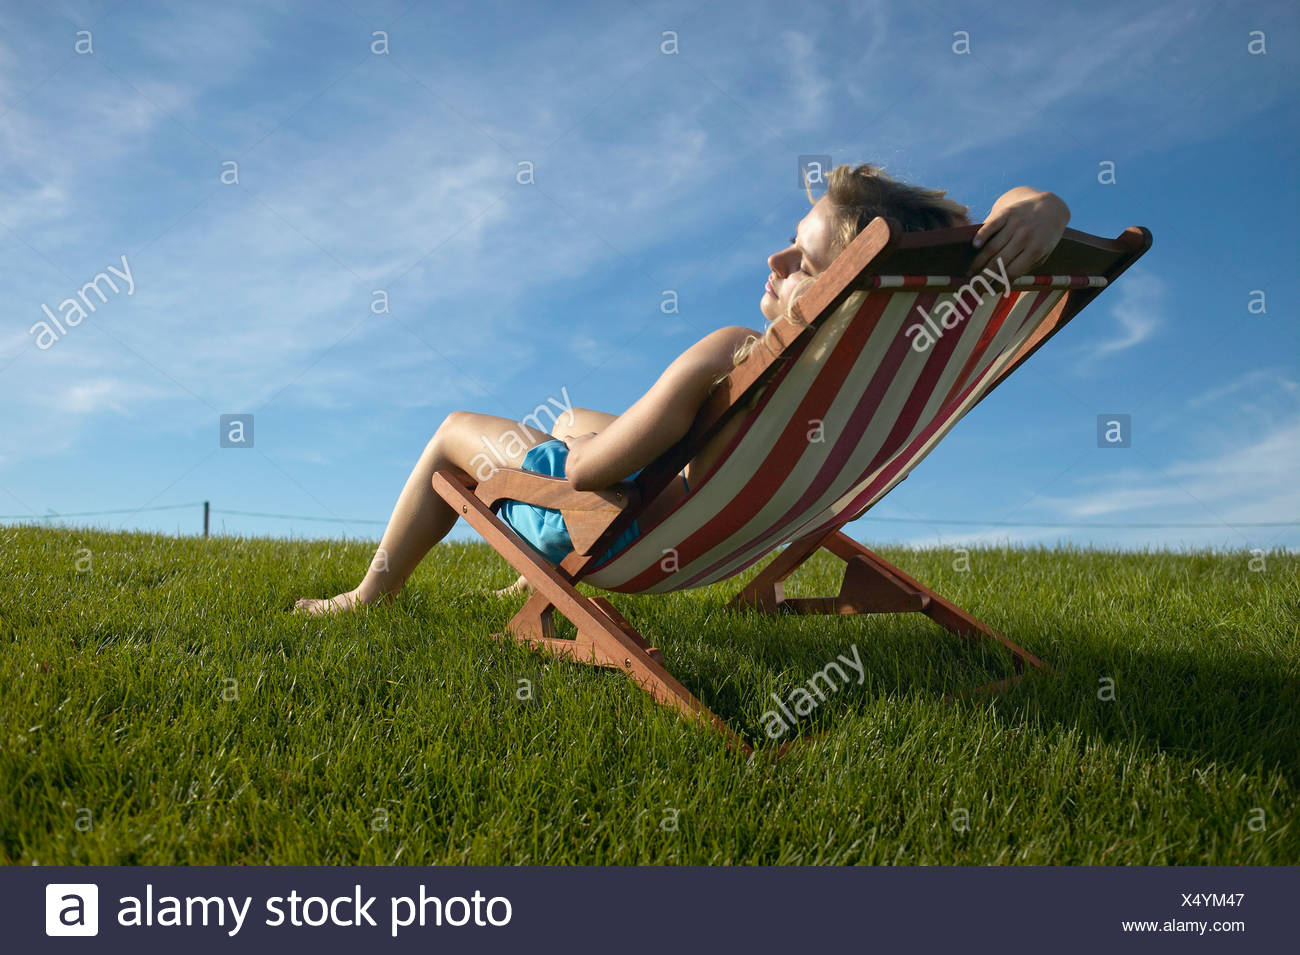 sun tanning chair